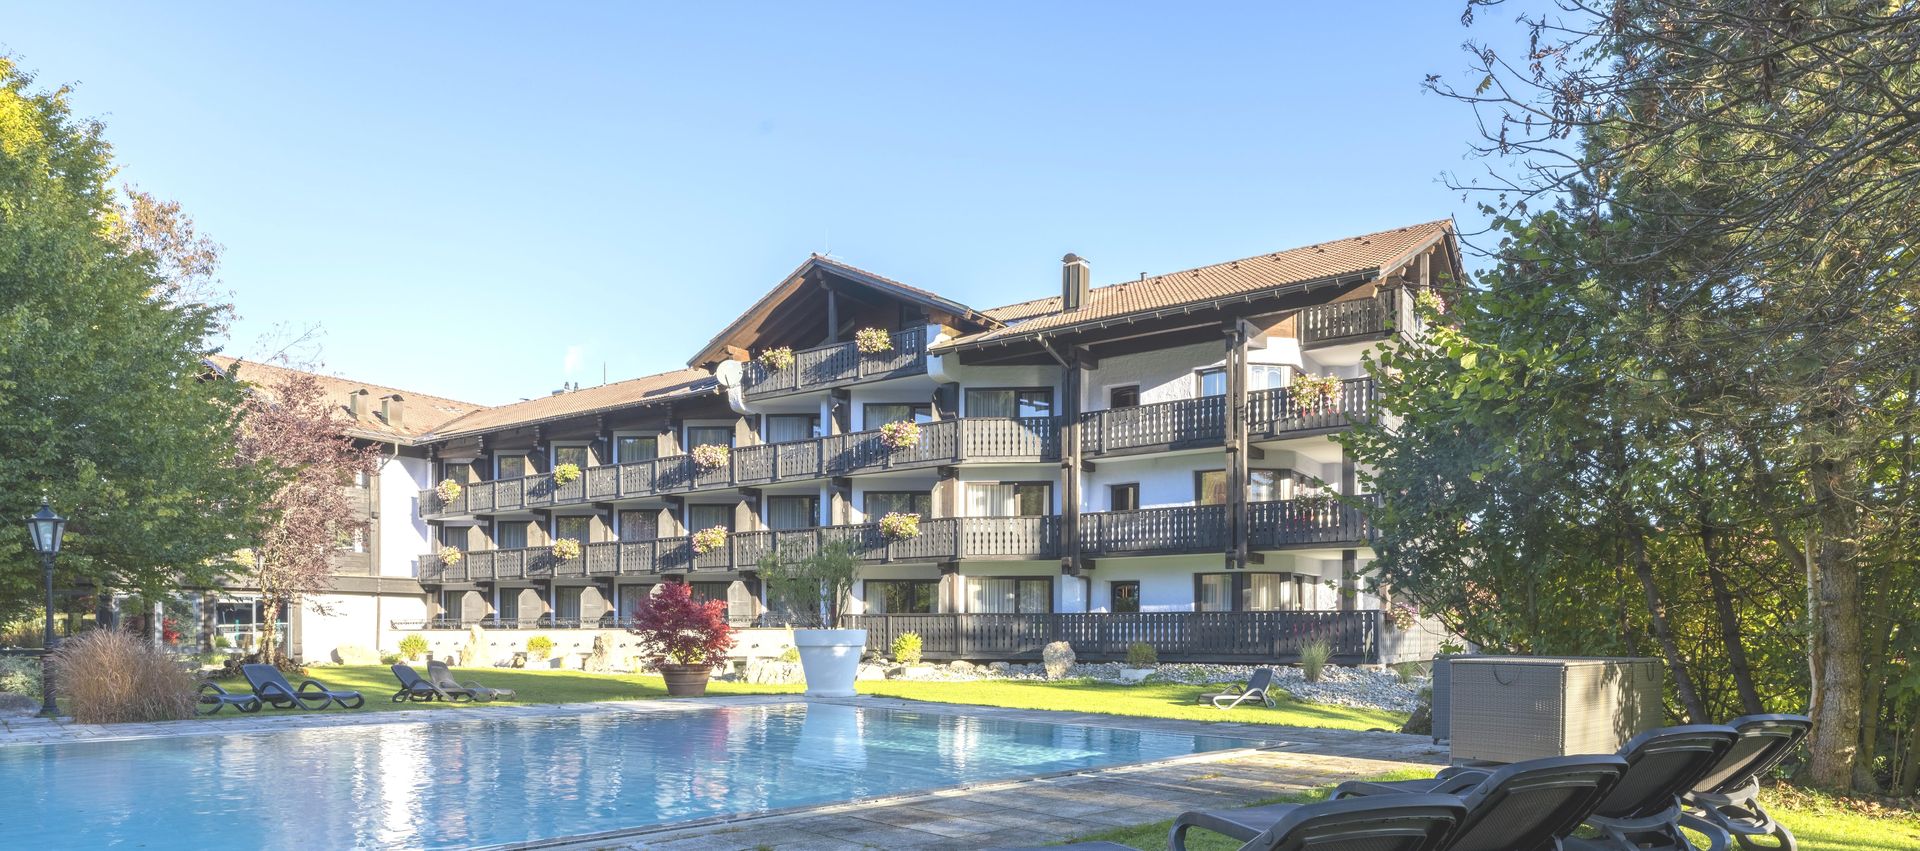 Meer info over Golf & Alpin Wellness Resort Hotel Ludwig Royal  bij Wintertrex